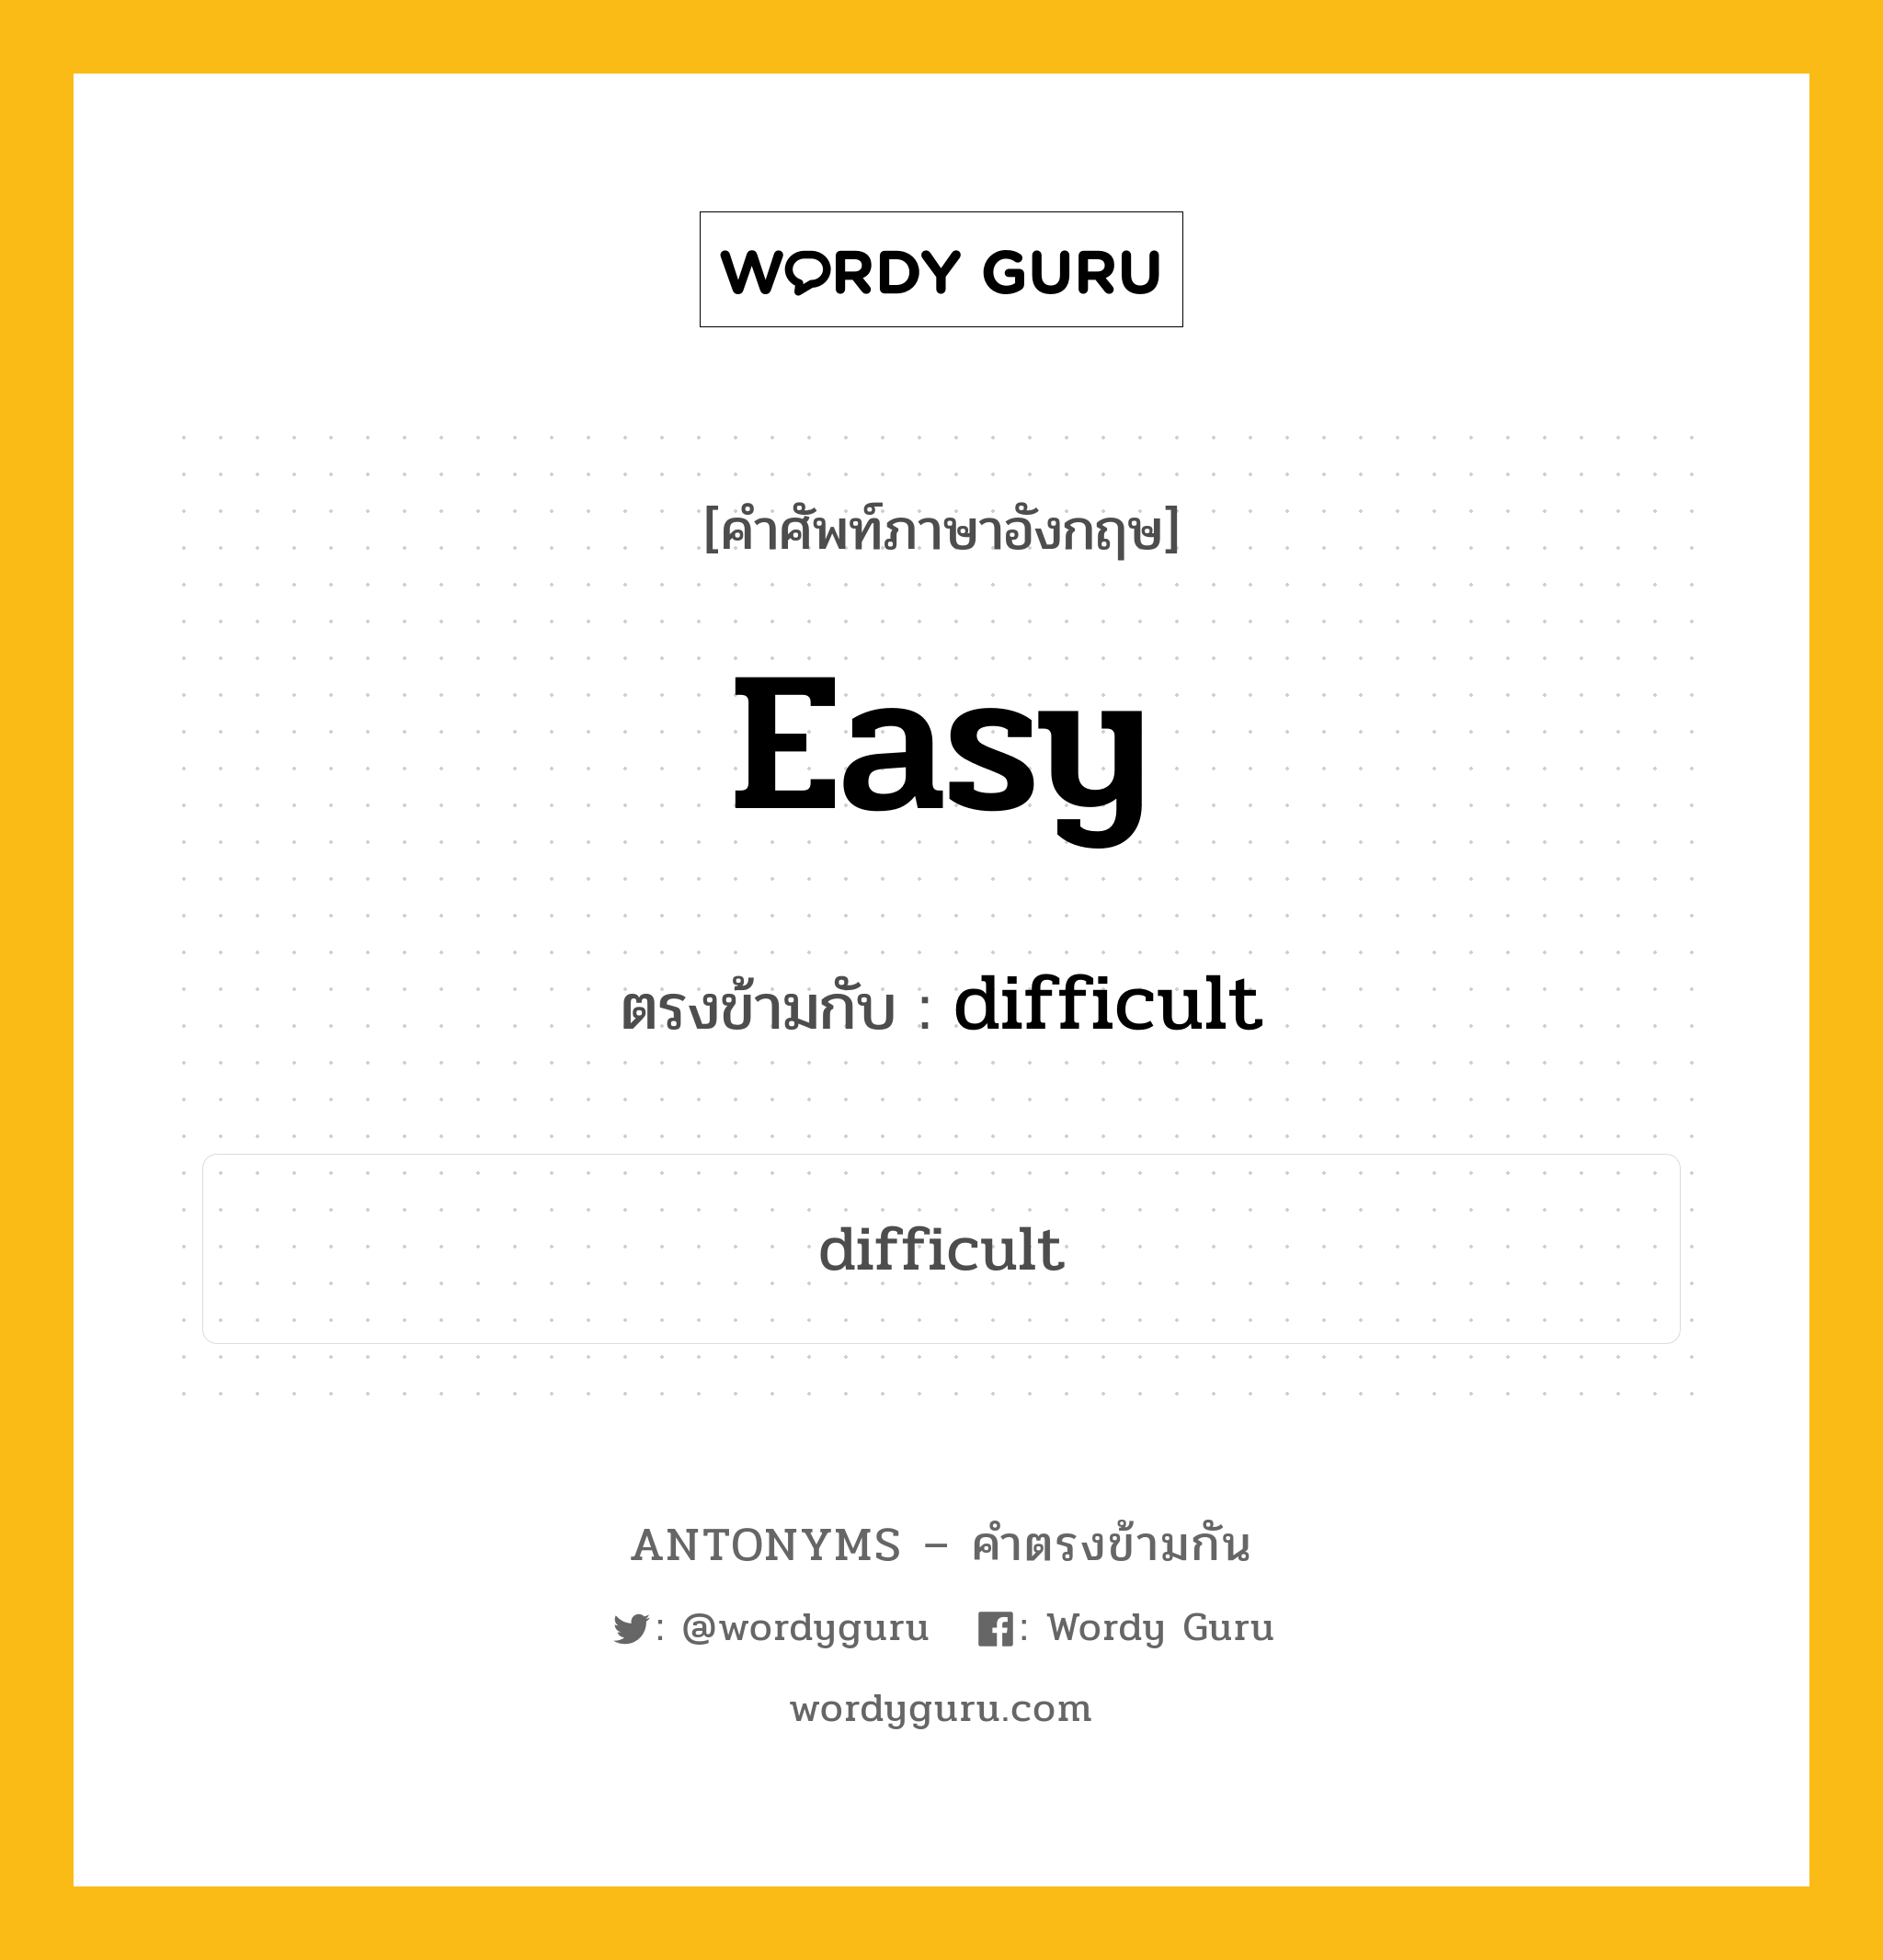 easy เป็นคำตรงข้ามกับคำไหนบ้าง?, คำศัพท์ภาษาอังกฤษ easy ตรงข้ามกับ difficult หมวด difficult